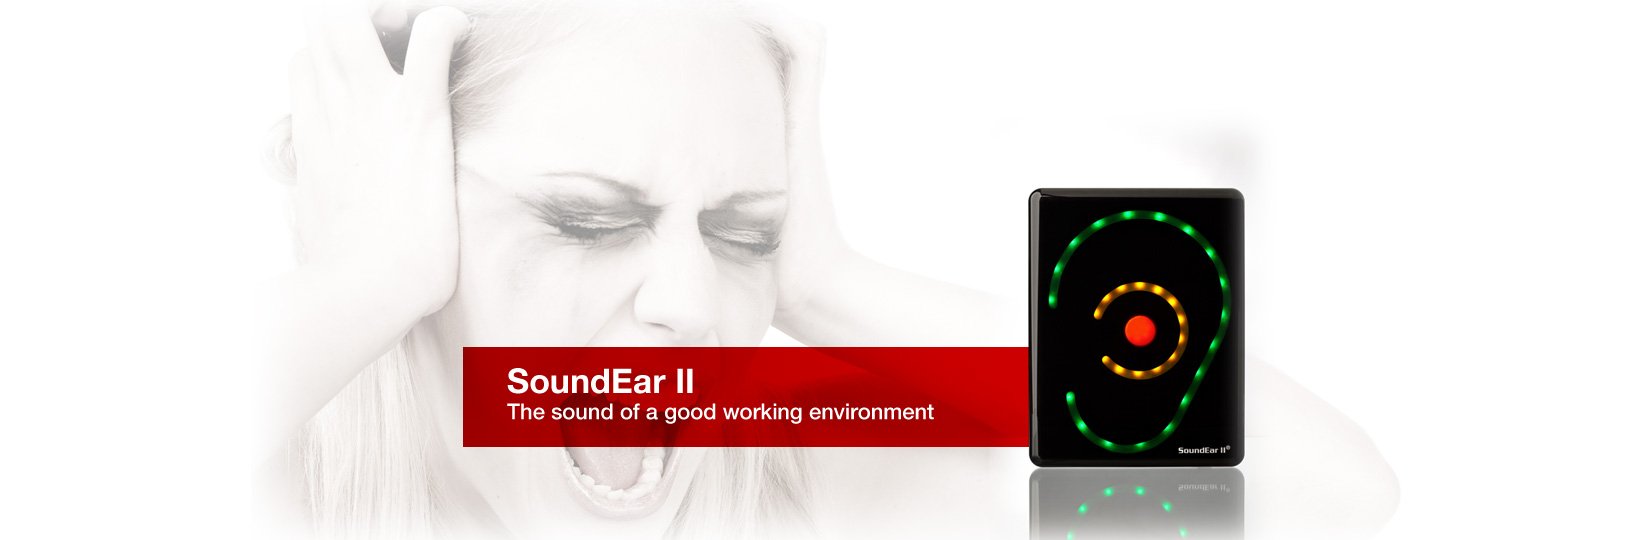 SoundEar 2 Noise Level Monitor